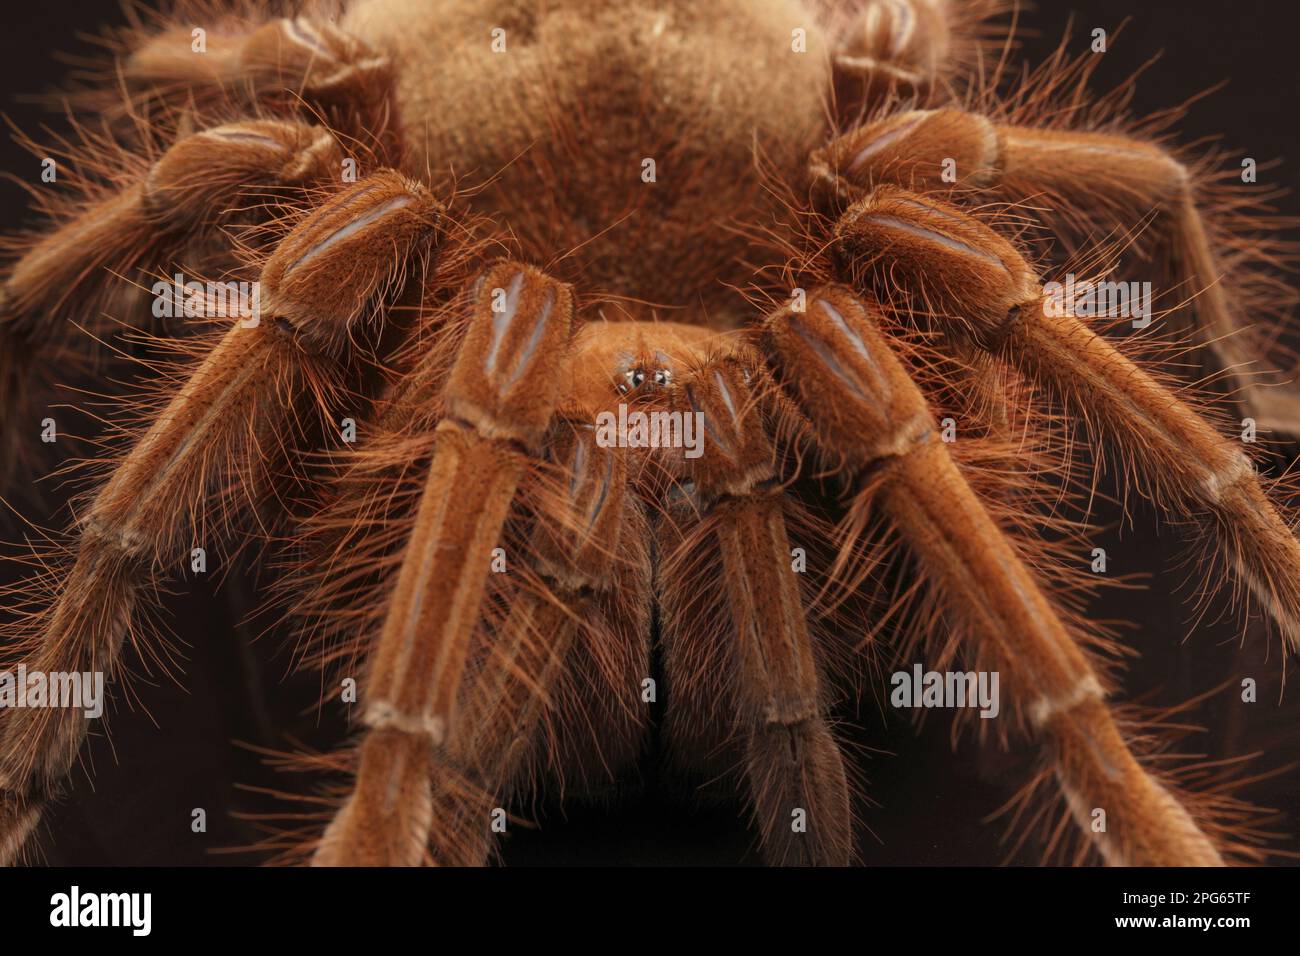 Venezuela Giant Bird Spider (Theraphosa apophysis), Venezuela Giant Bird Spiders, Other animals, Spiders, Arachnids, Animals, Tarantulas Stock Photo